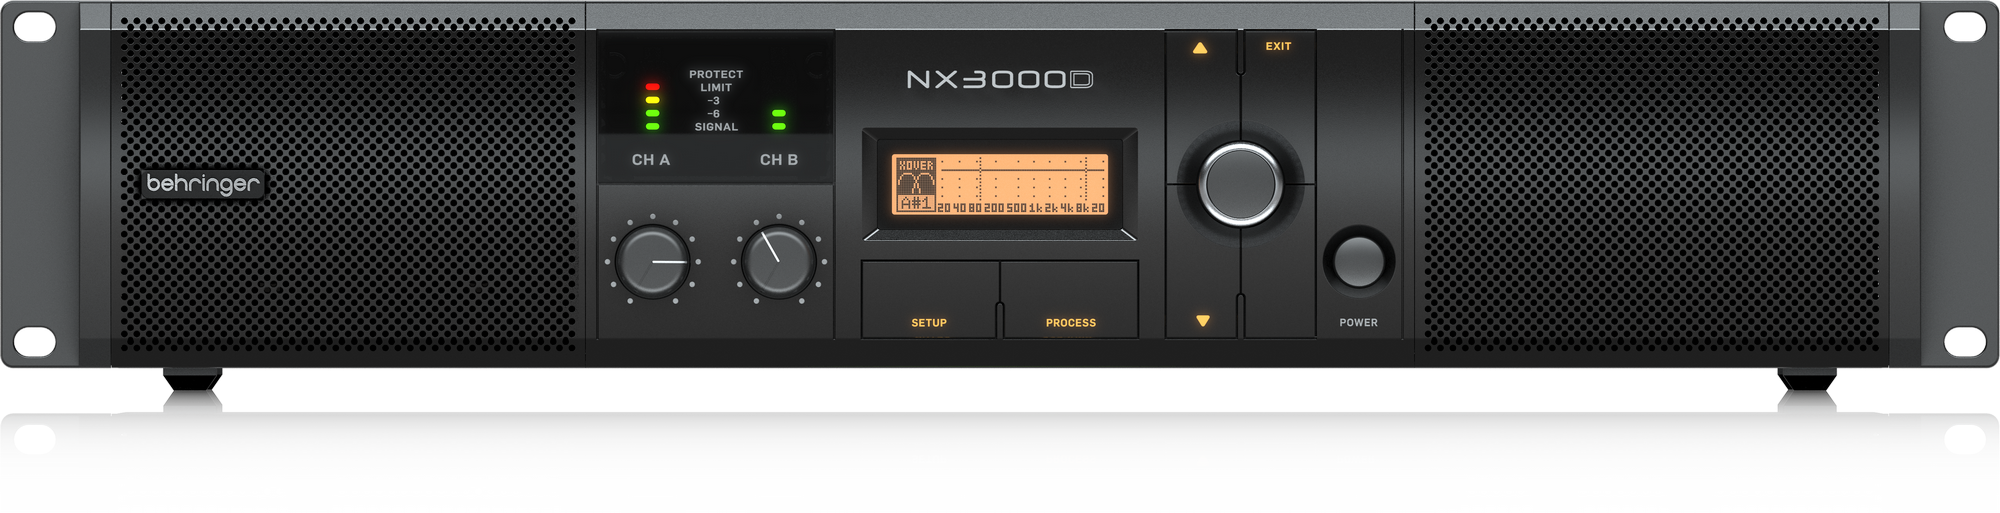 Усилитель мощности Behringer NX3000D